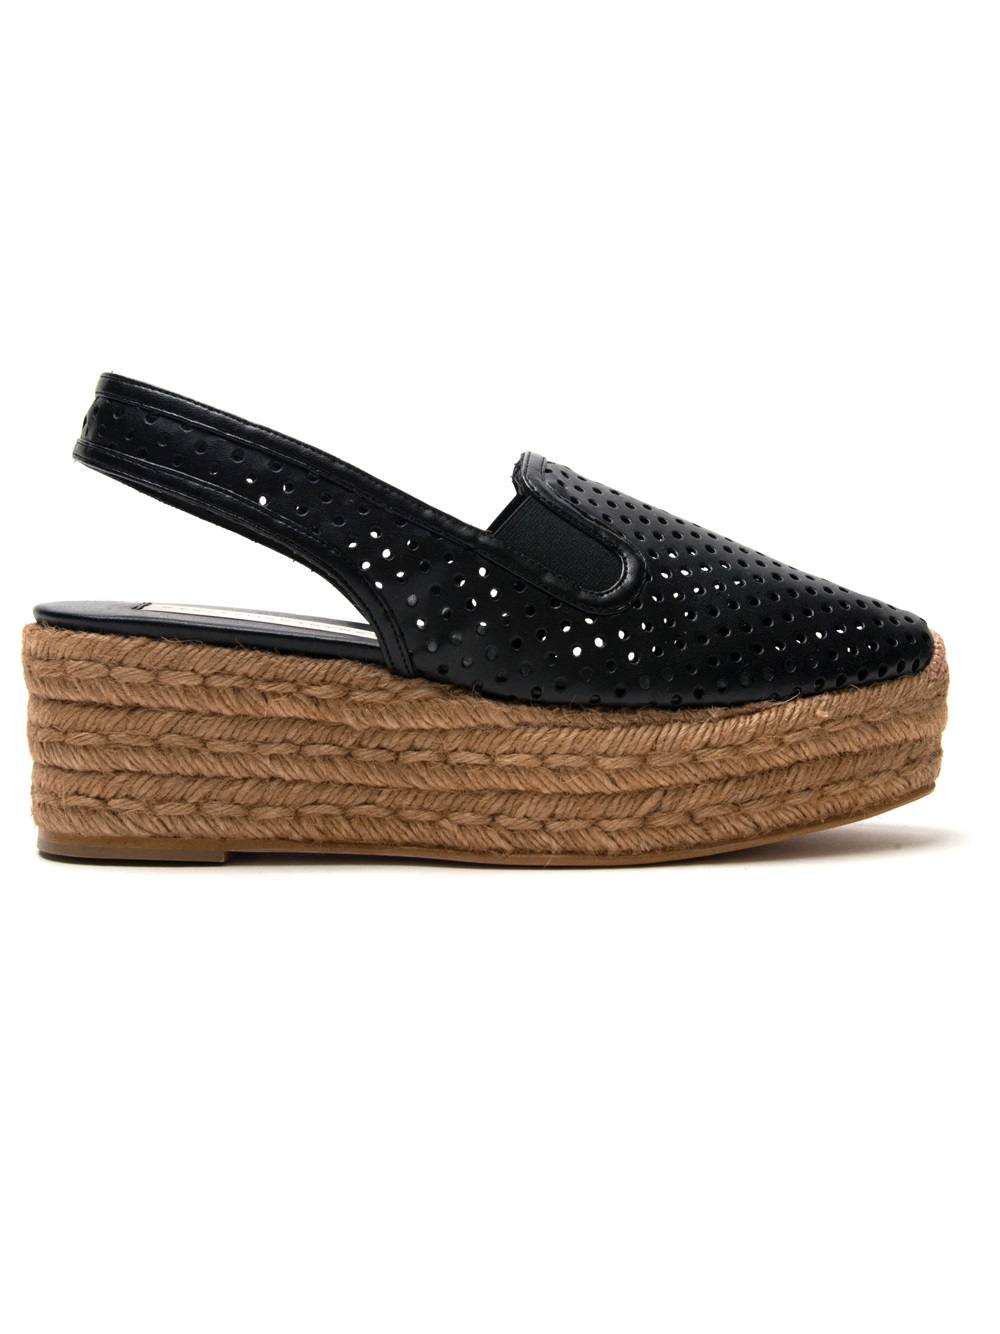 Stella mccartney Perforated Wedge Sandal in Black | Lyst